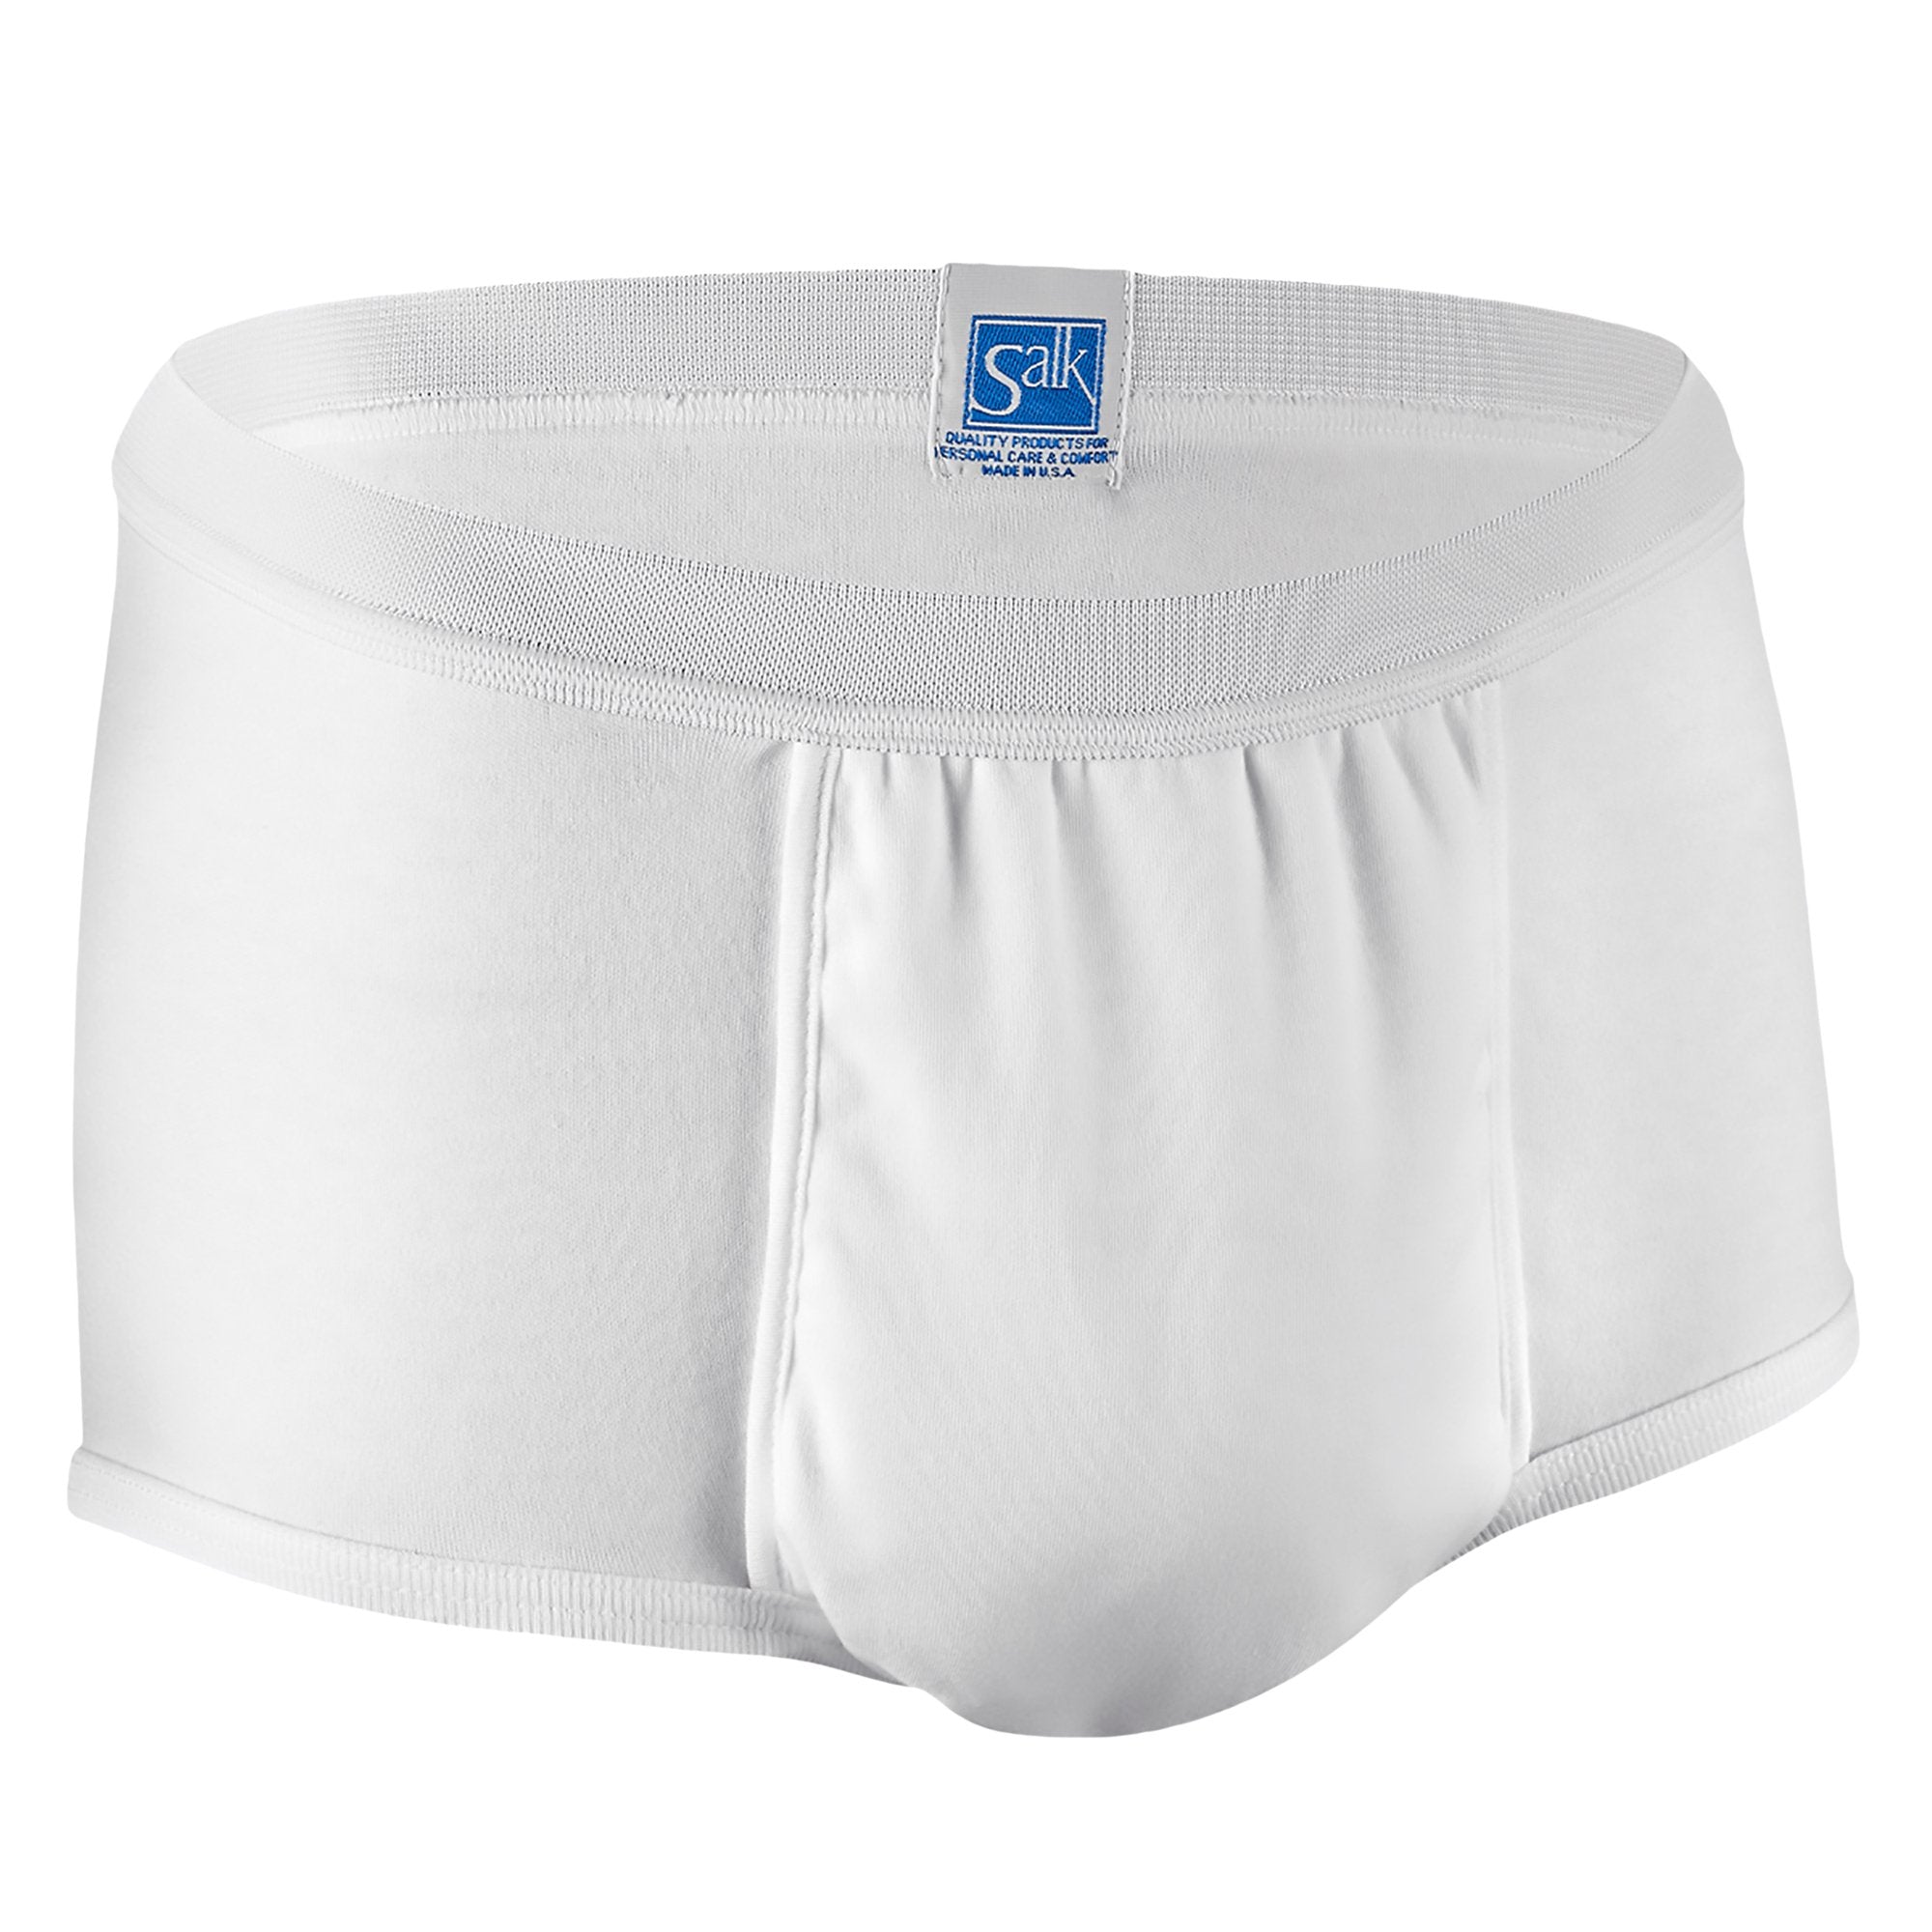 Male Adult Absorbent Underwear Light & Dry™ Pull On Medium Reusable Light Absorbency